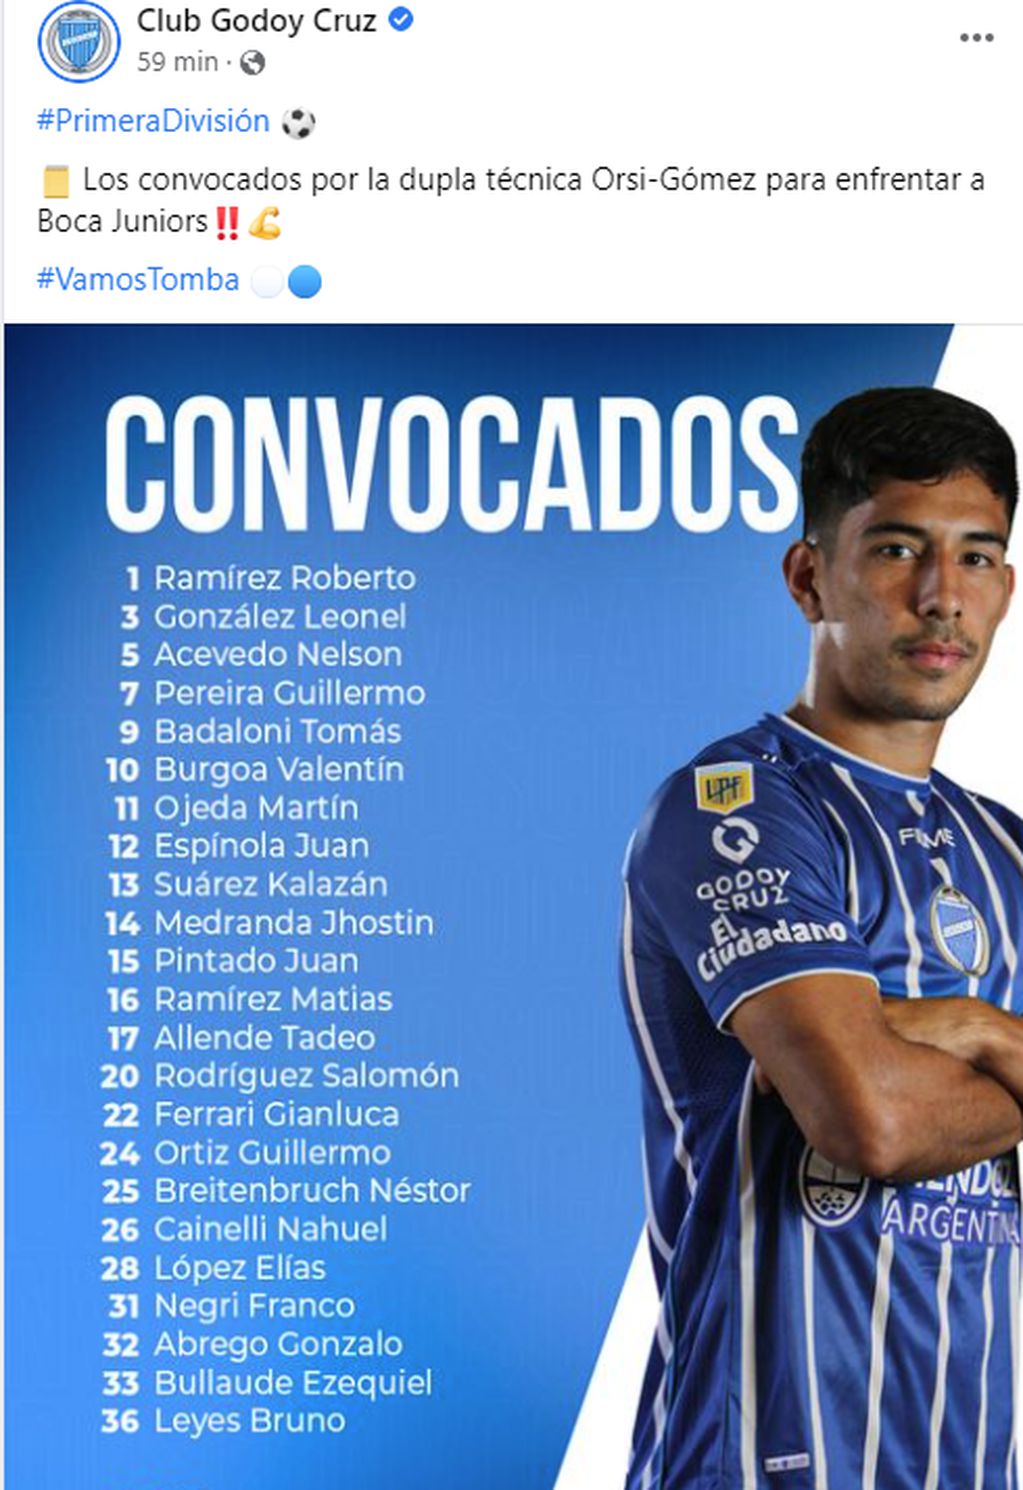 La lista de los jugadores de Godoy Cruz para enfrentar este miércoles a Boca Juniors.